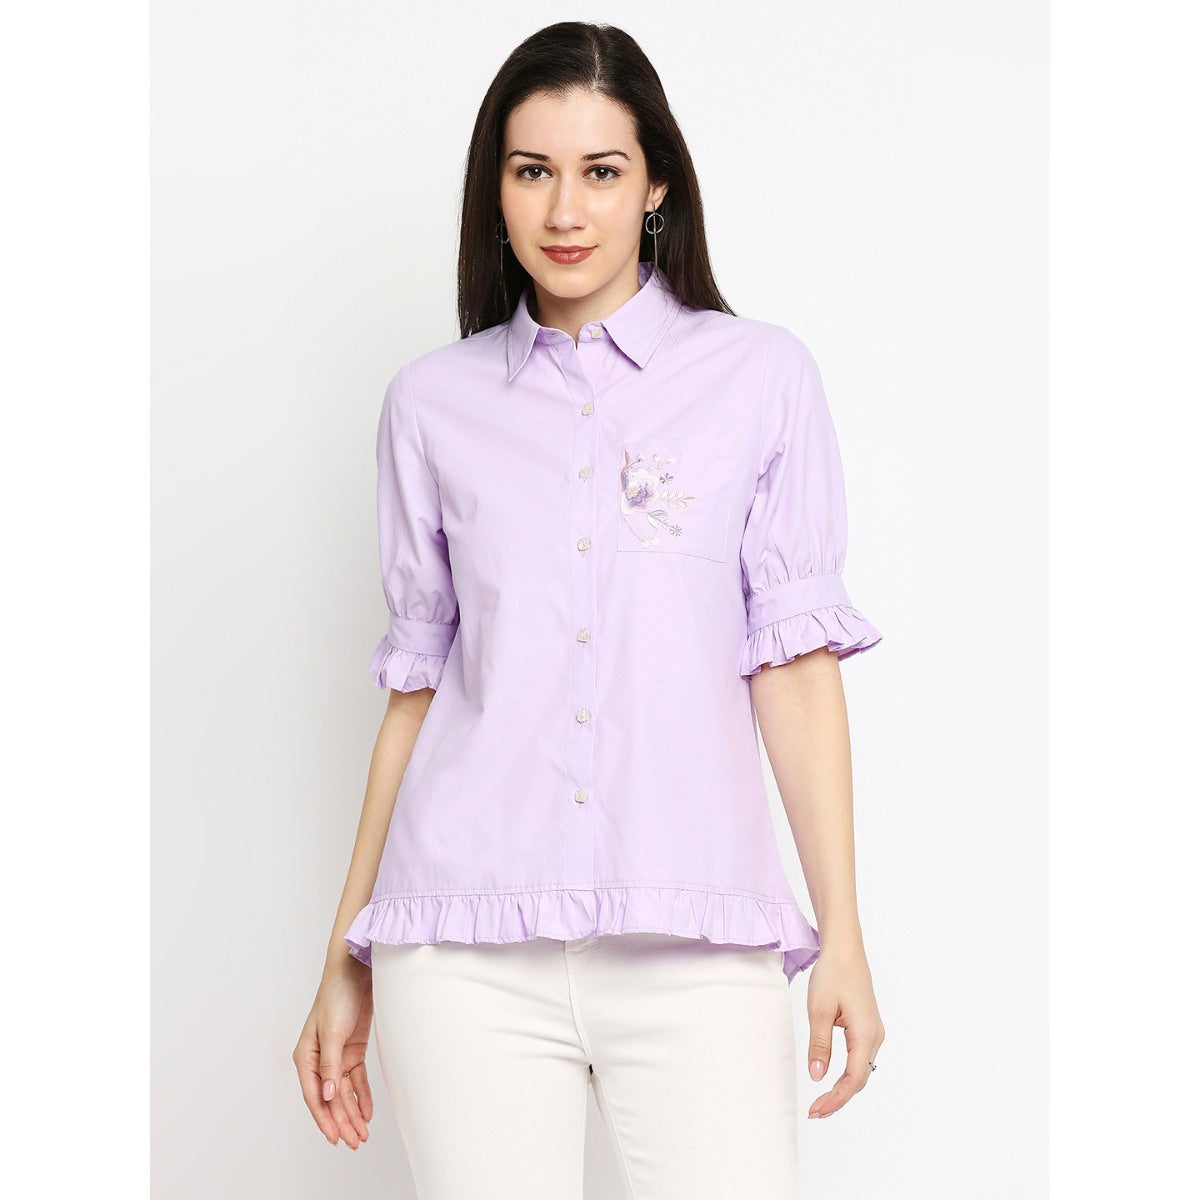 Mantra purple embroidered pocket shirt